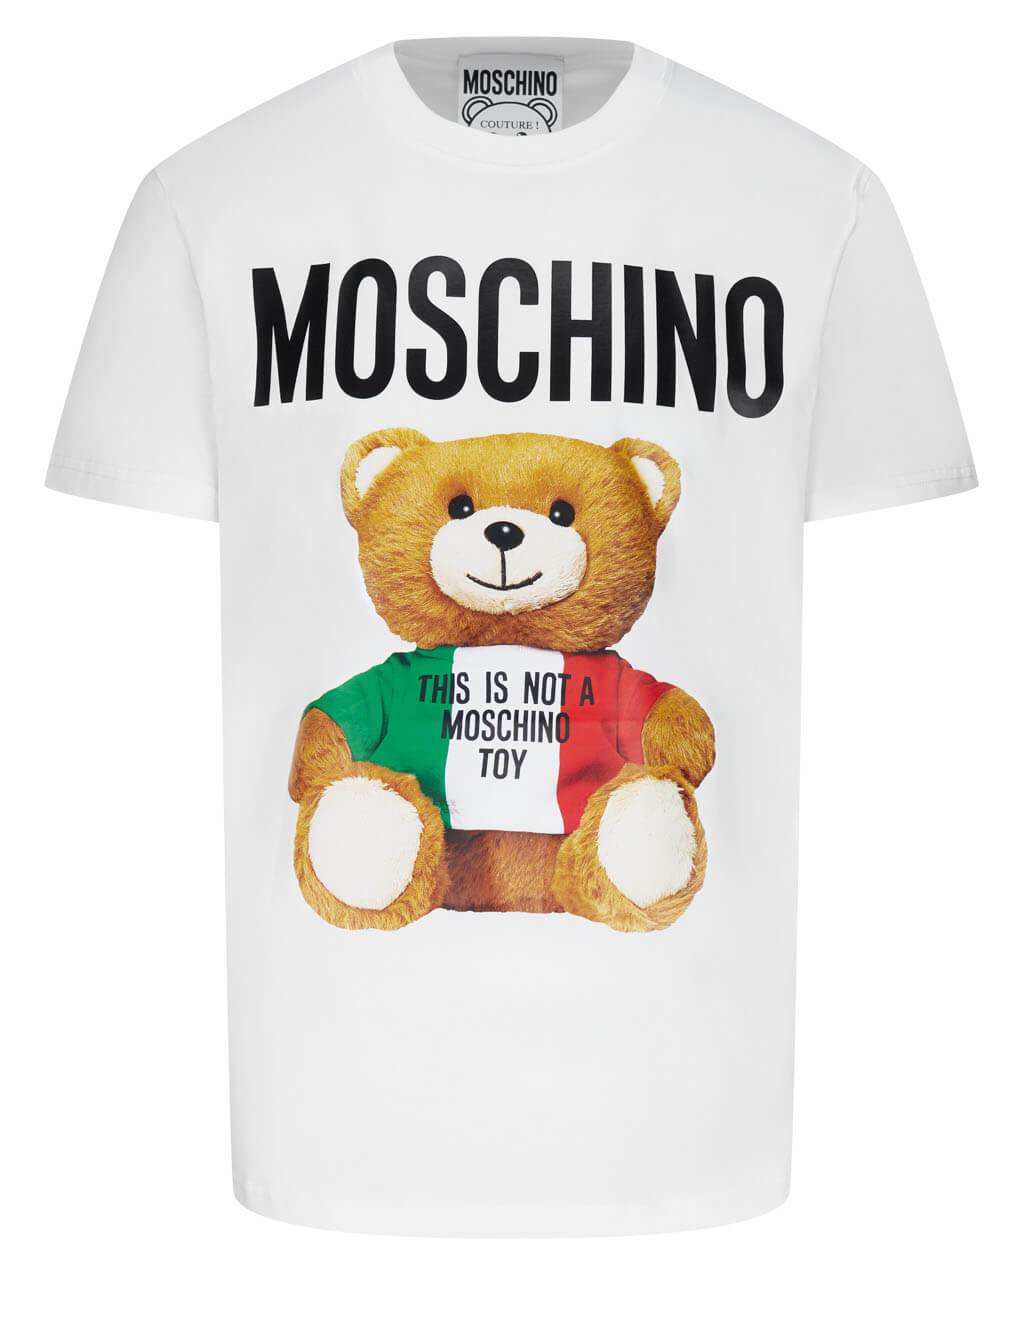 moschino men's t shirt bear